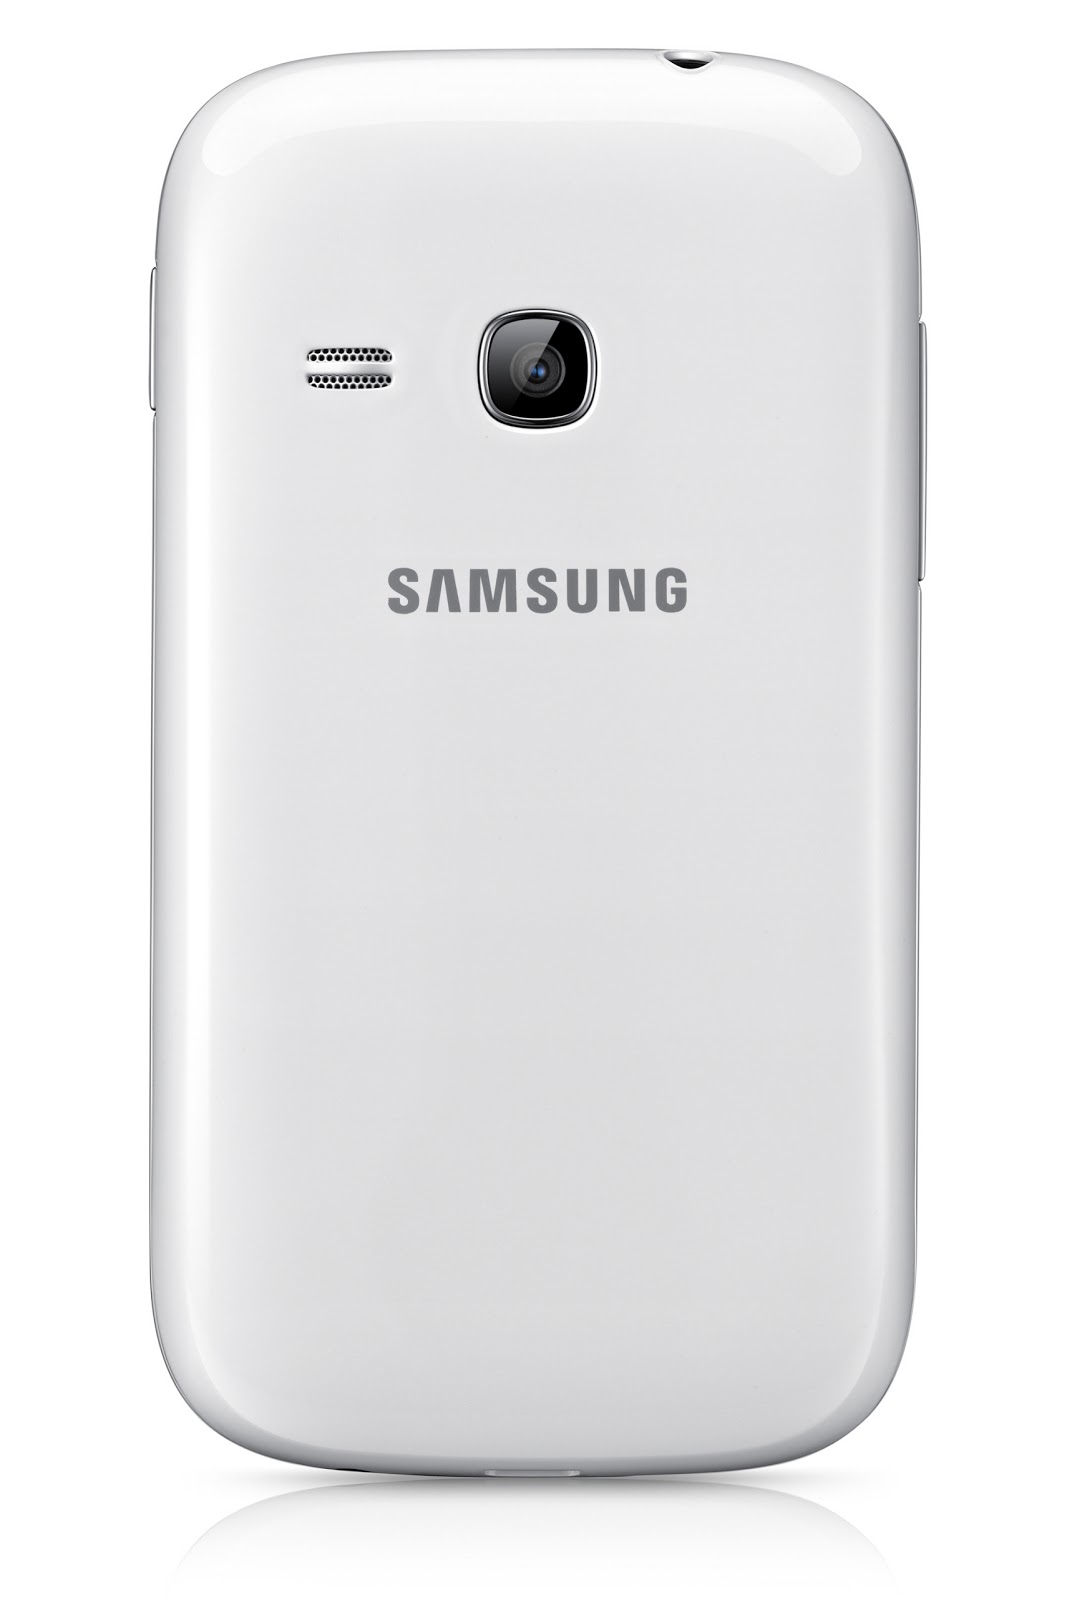 Spesifikasi dan Harga Samsung Galaxy Young dan Samsung Galaxy Fame